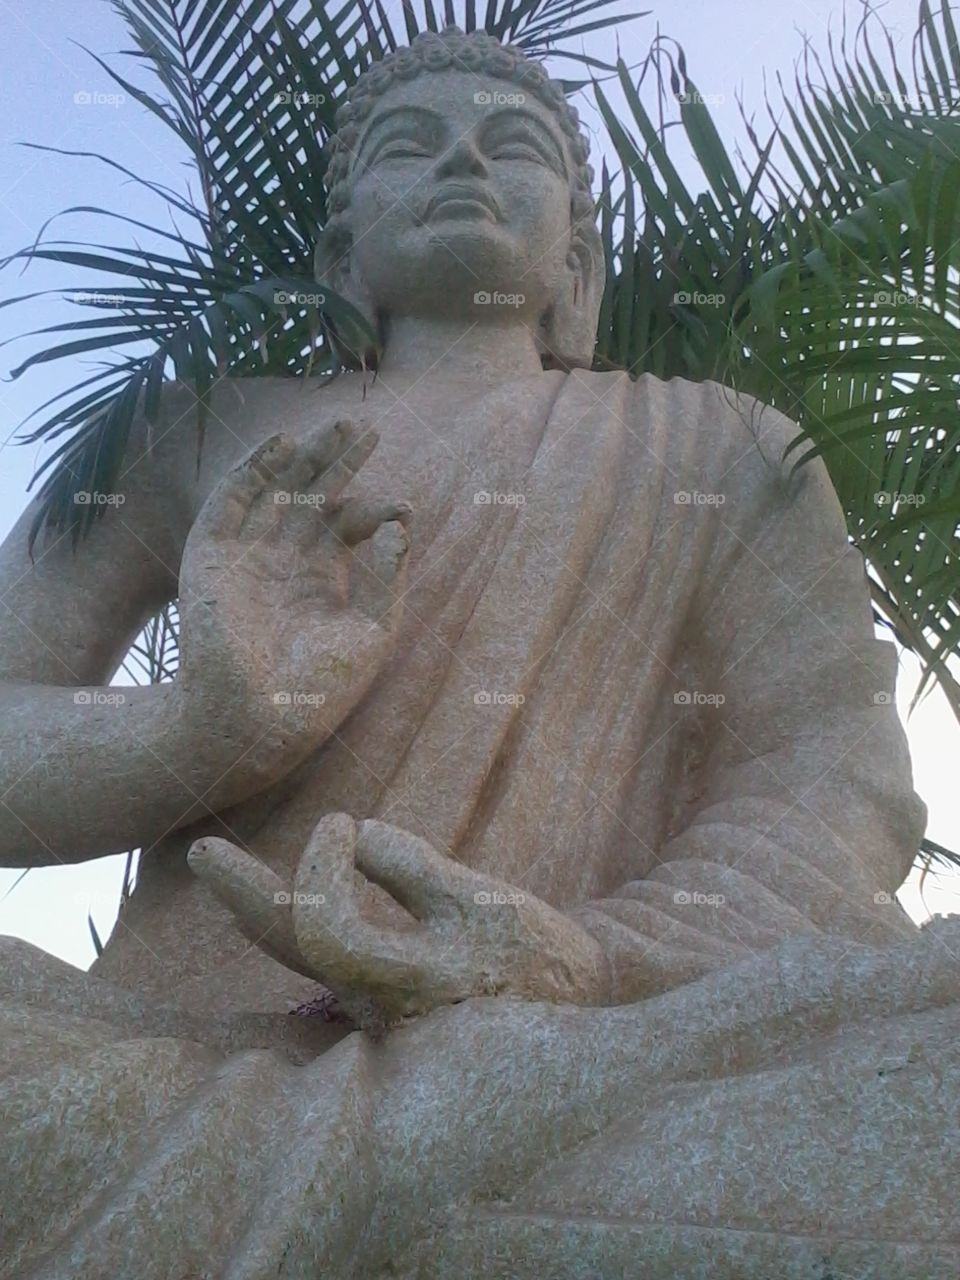 The Gautama Buddha